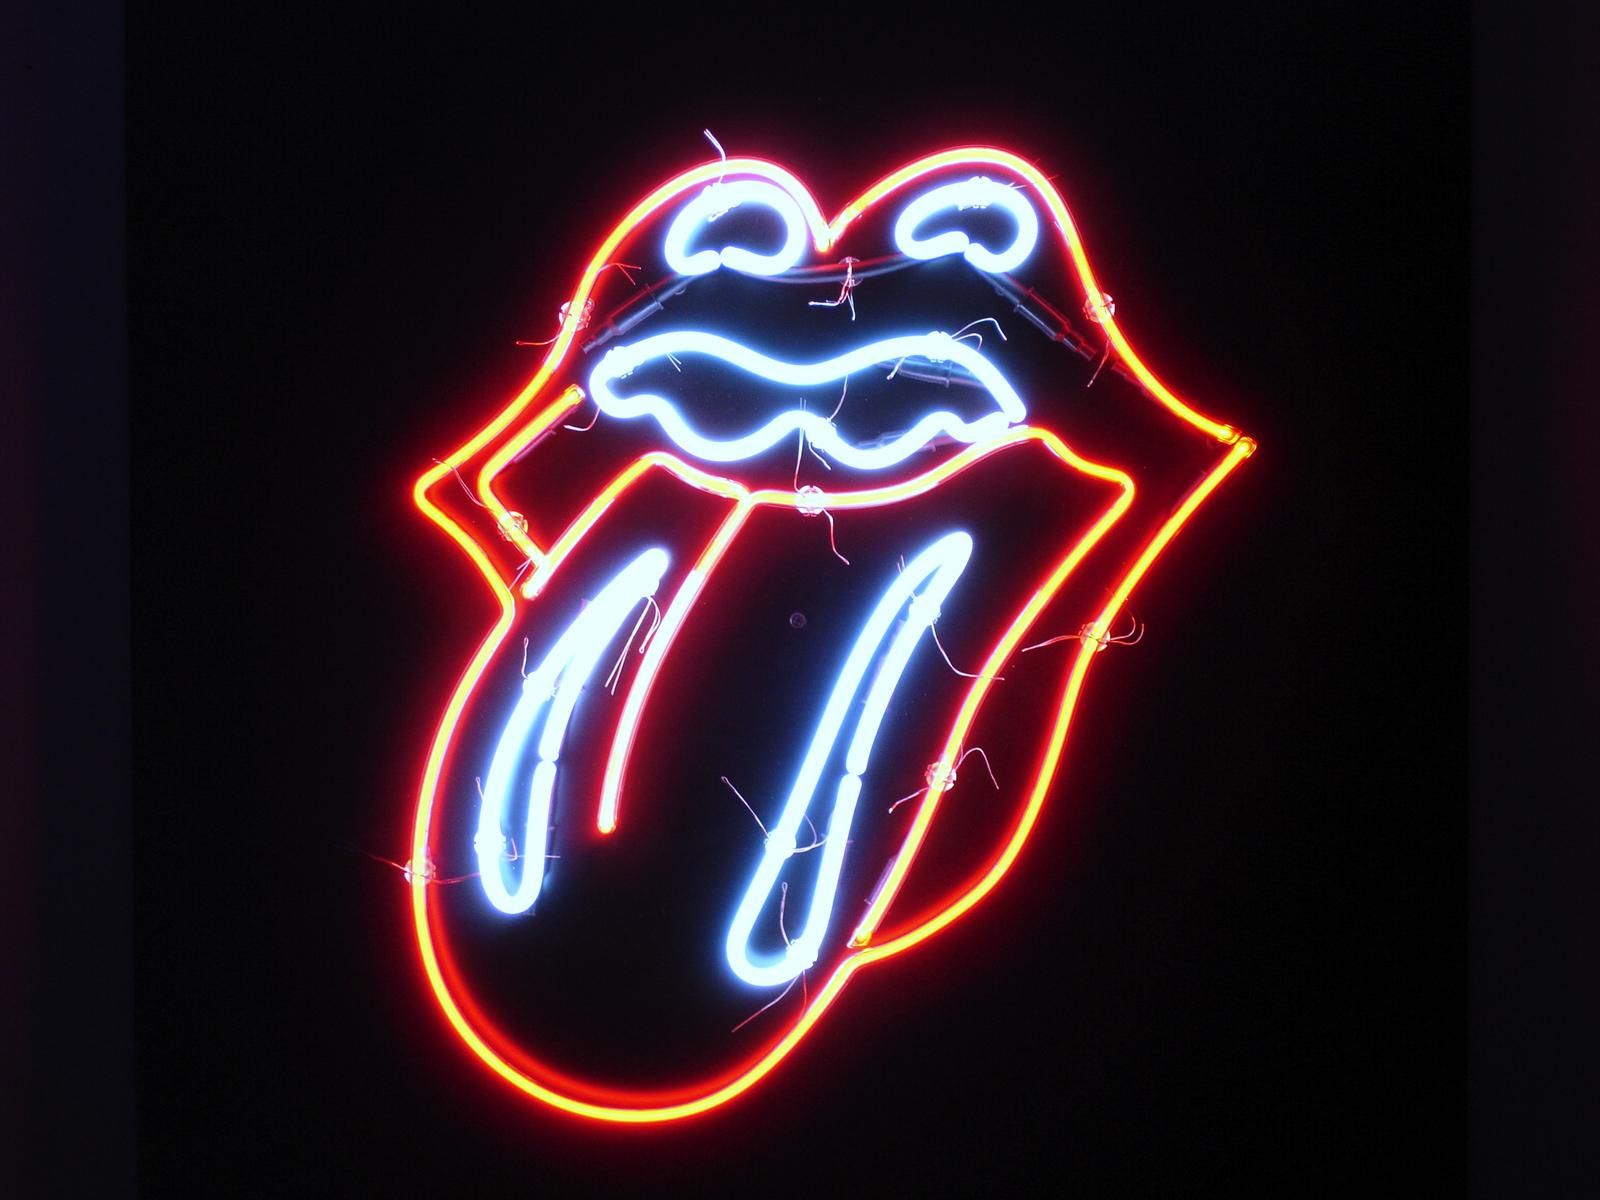 Rolling Stones Neon Sign - HD Wallpaper 